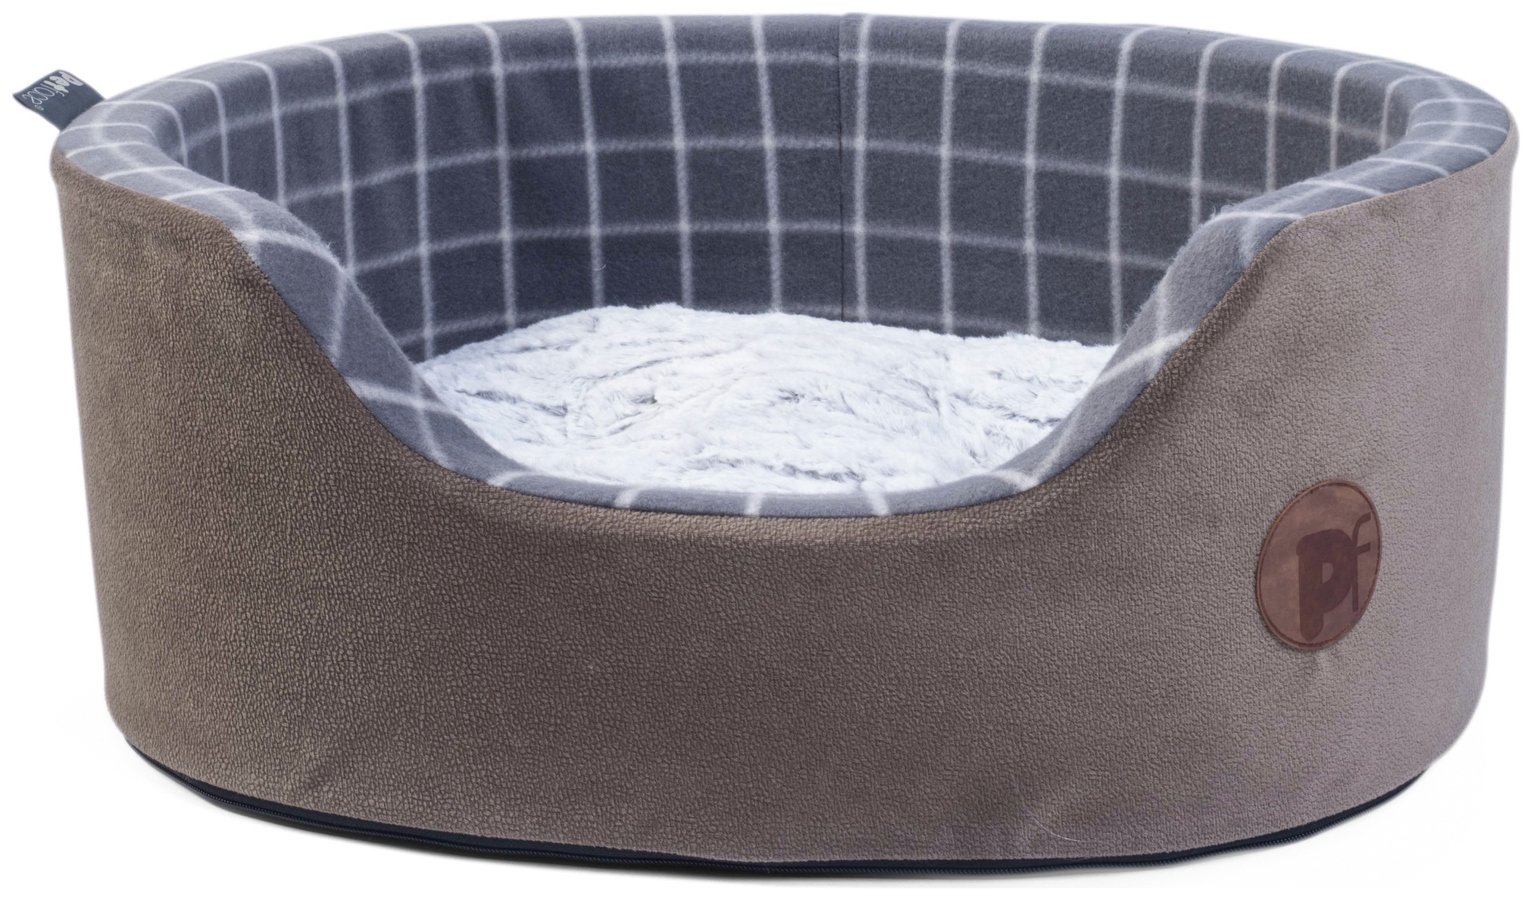 Petface Grey Window Check Foam Oval Pet Bed - Medium